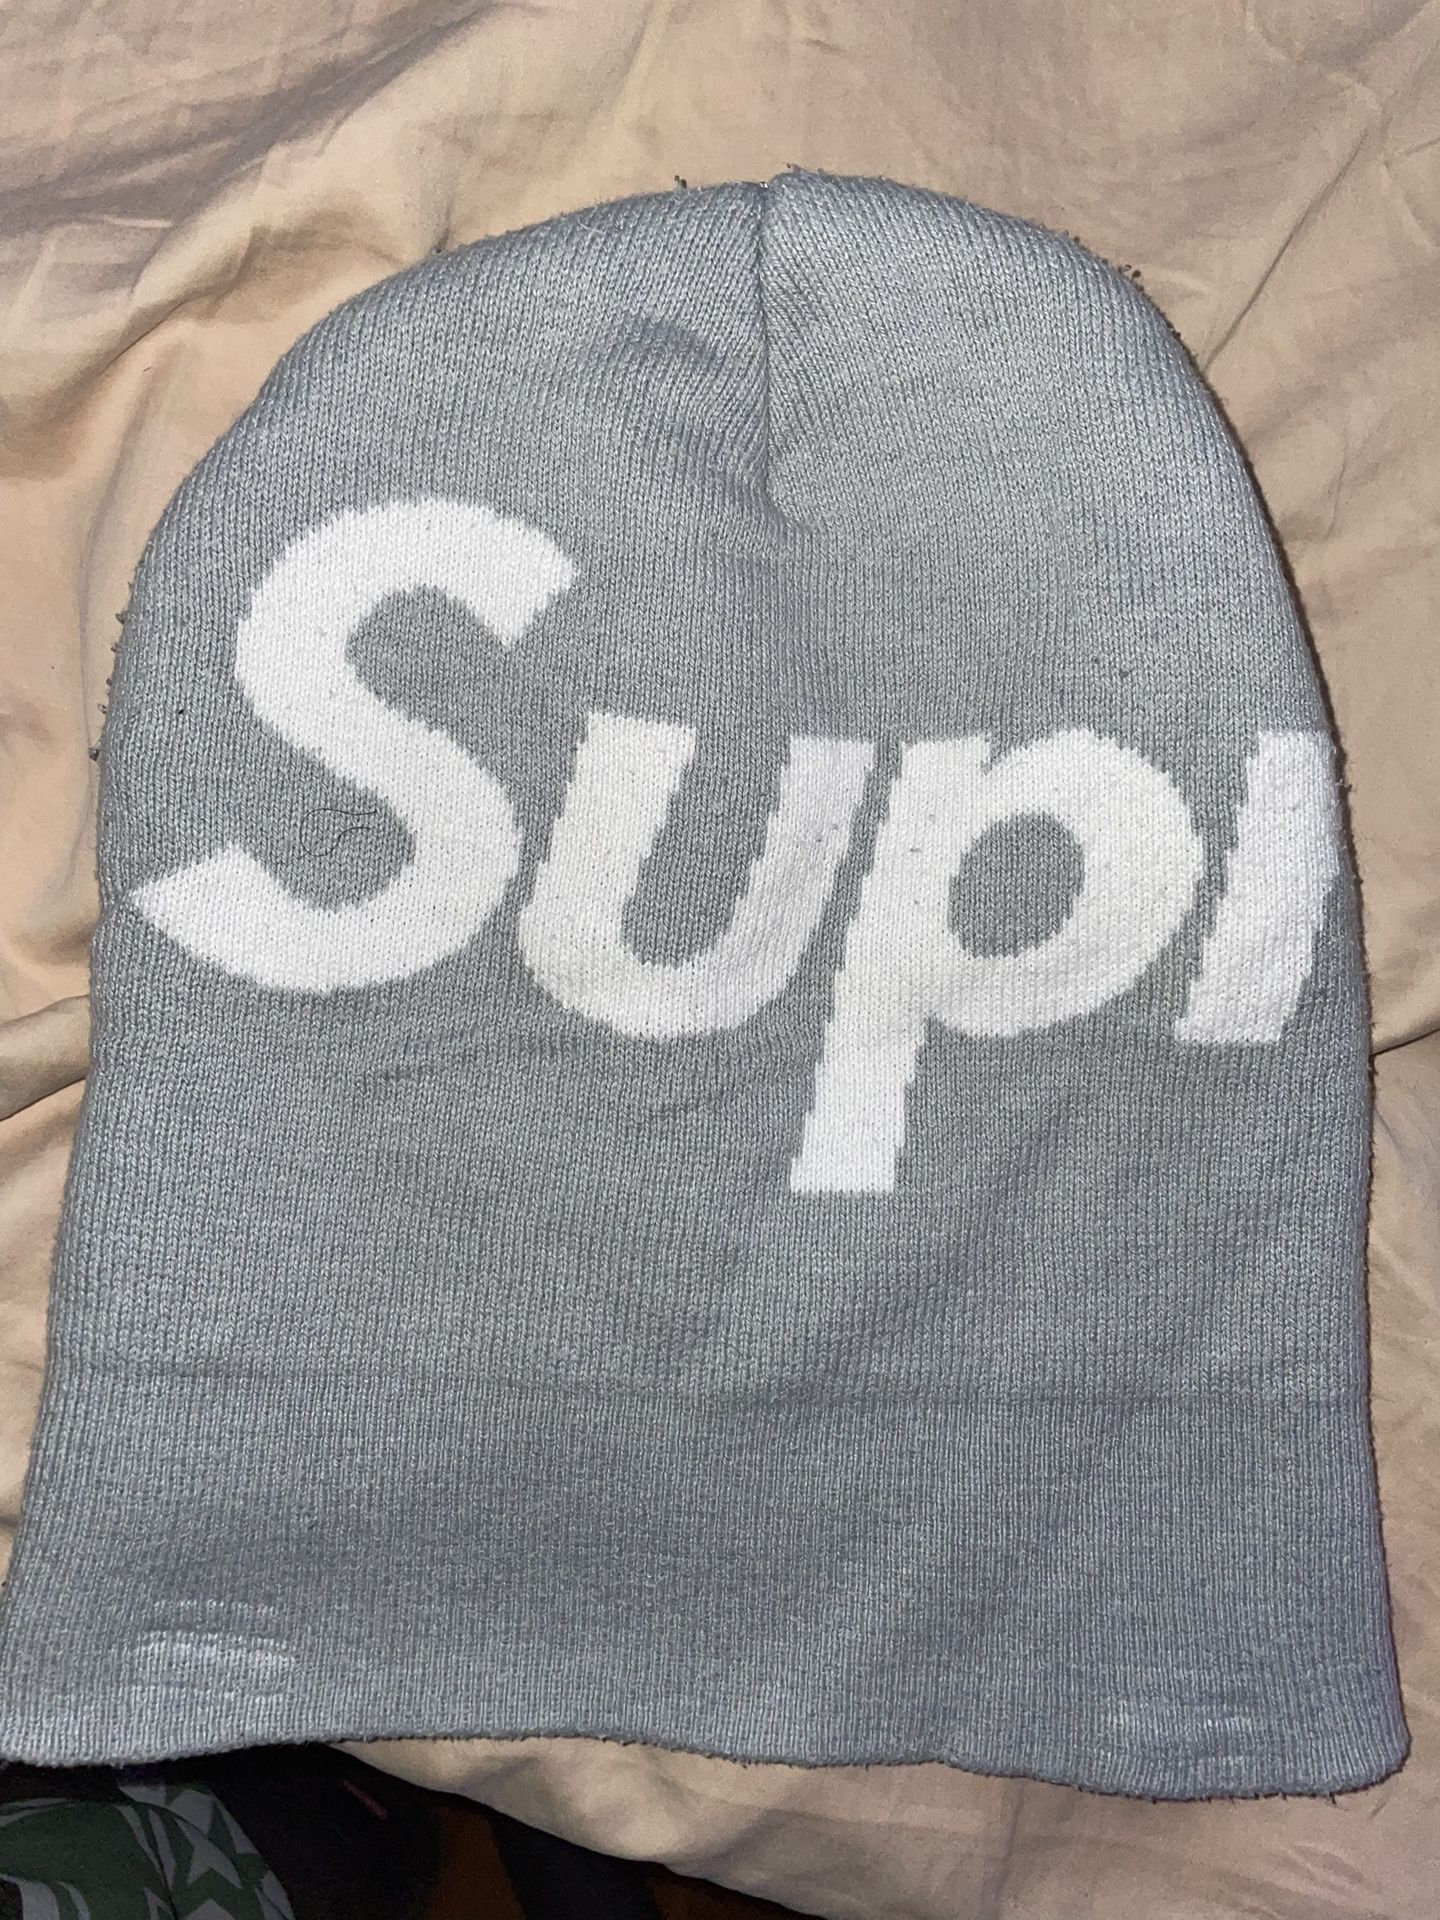 Used Supreme Hat 